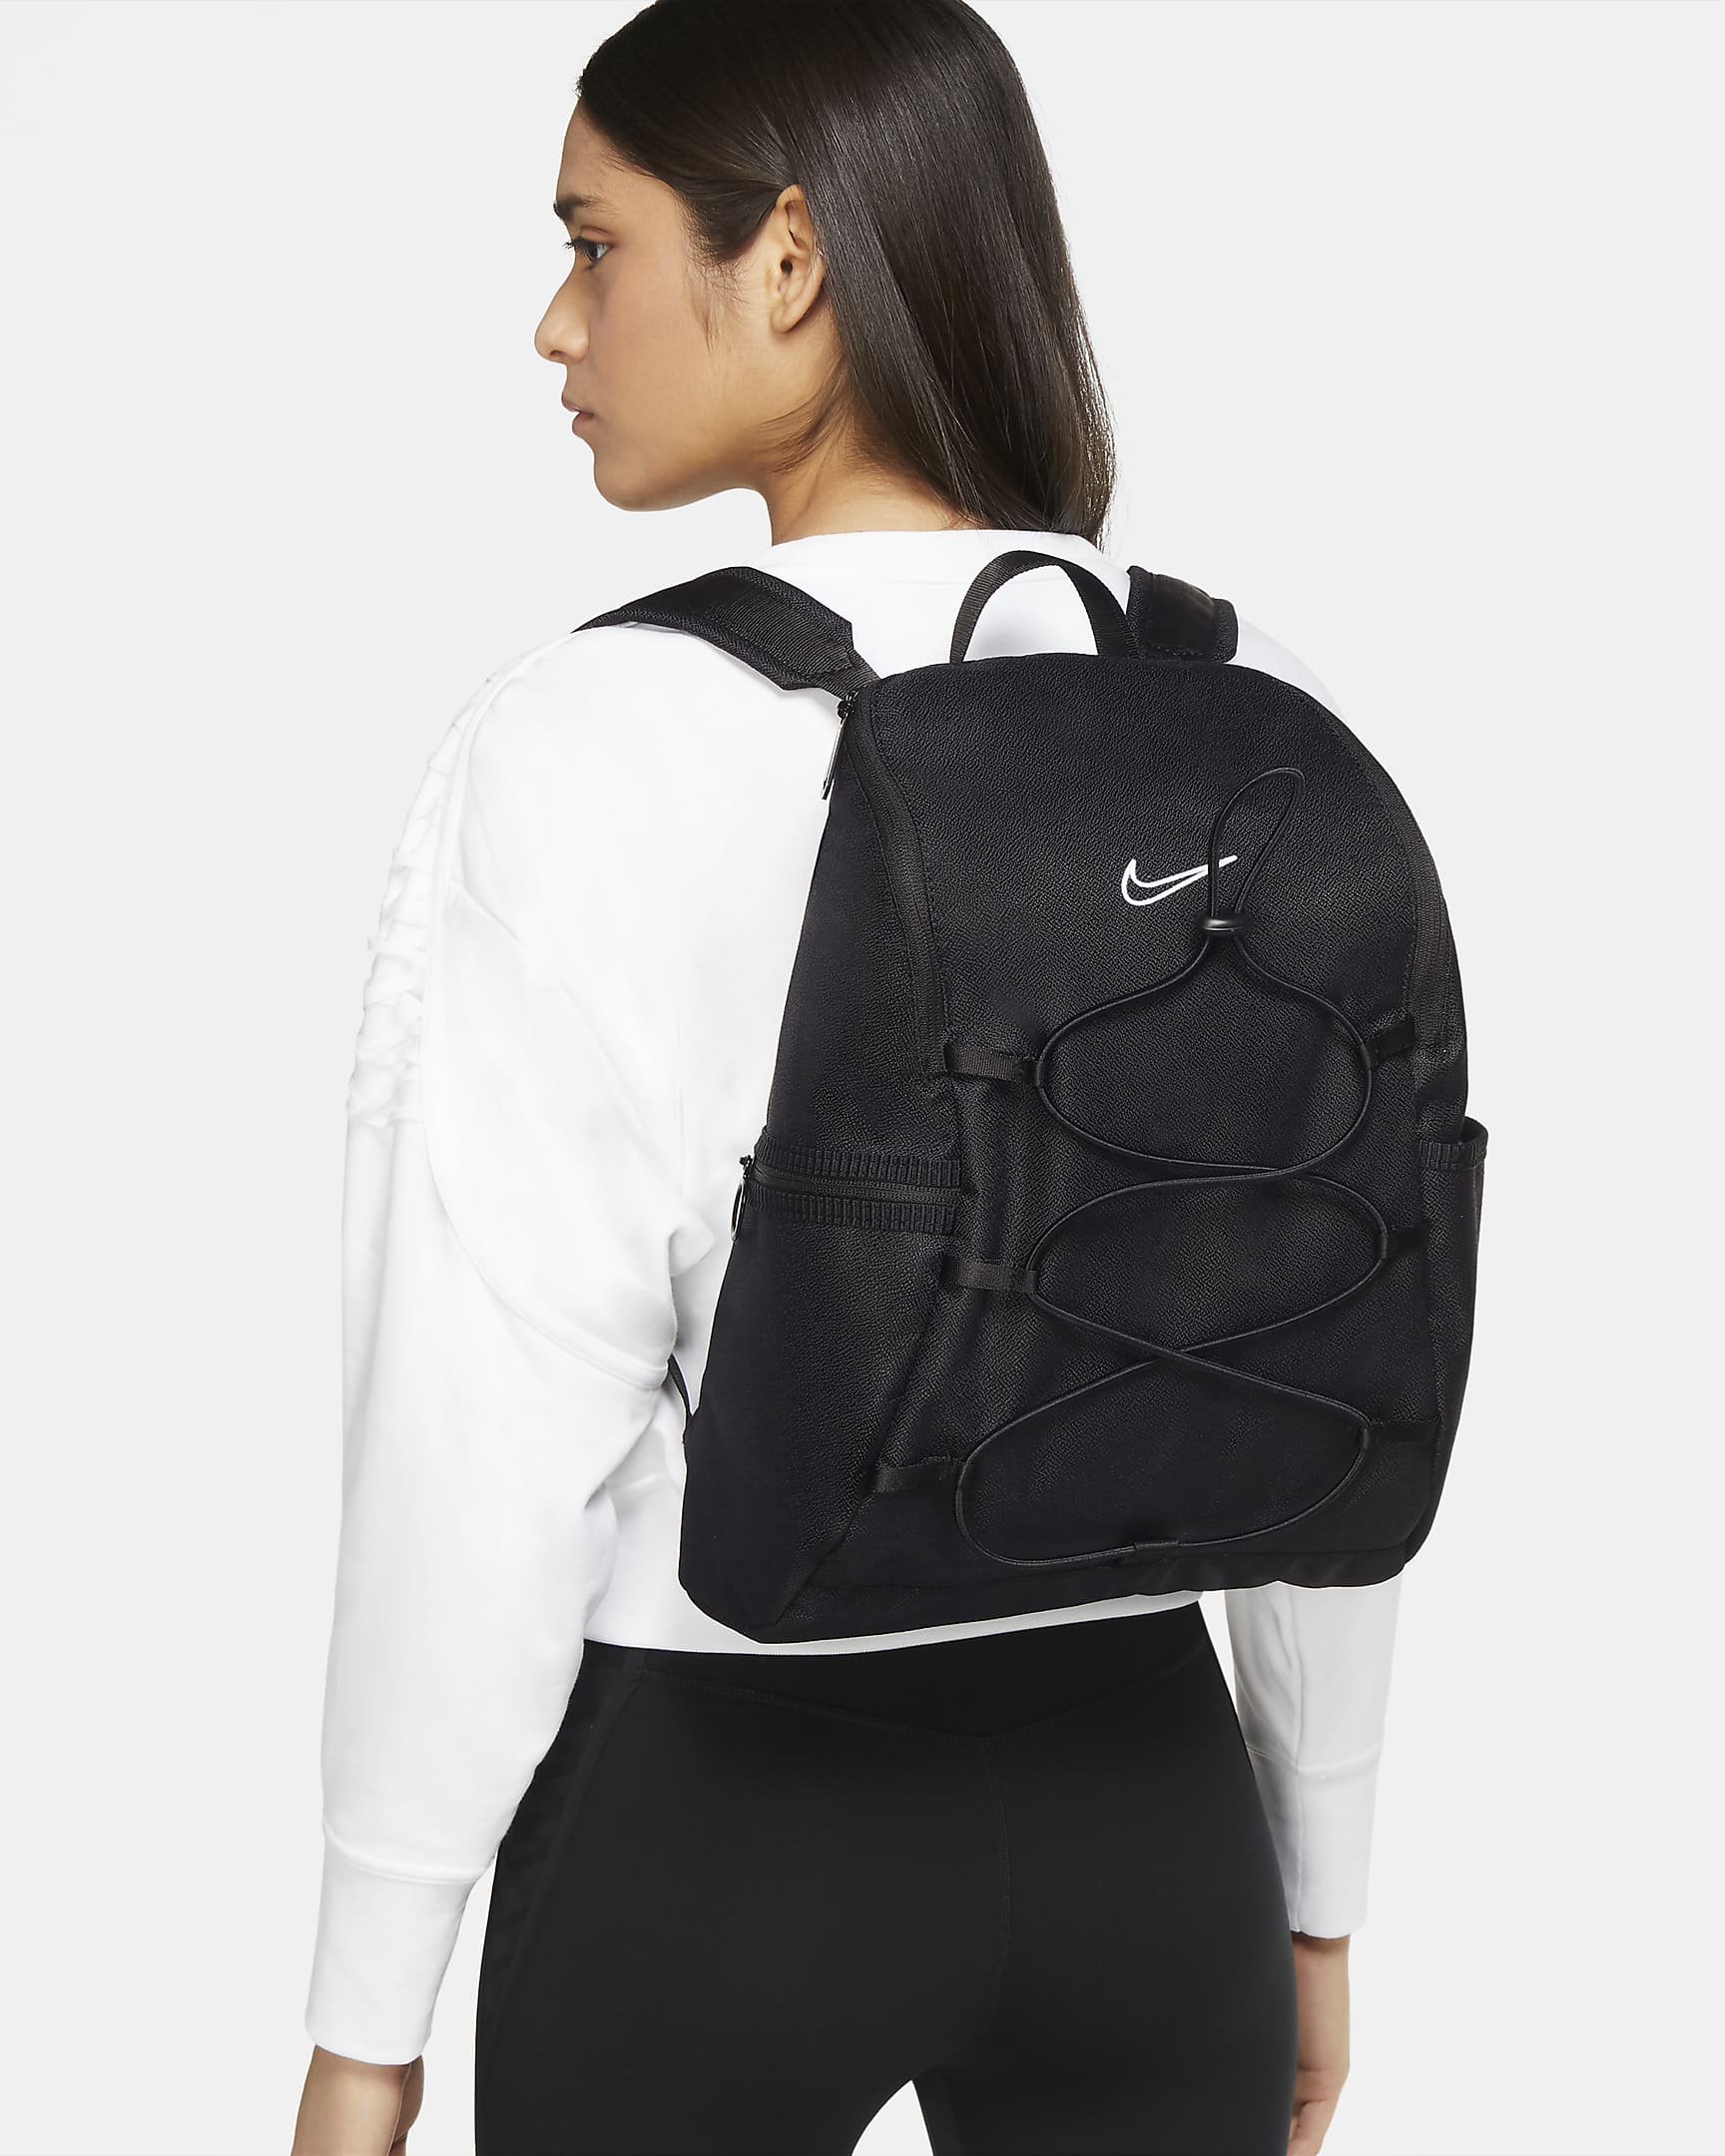 Nike One Women's Training Backpack (16L) - Black/Black/White